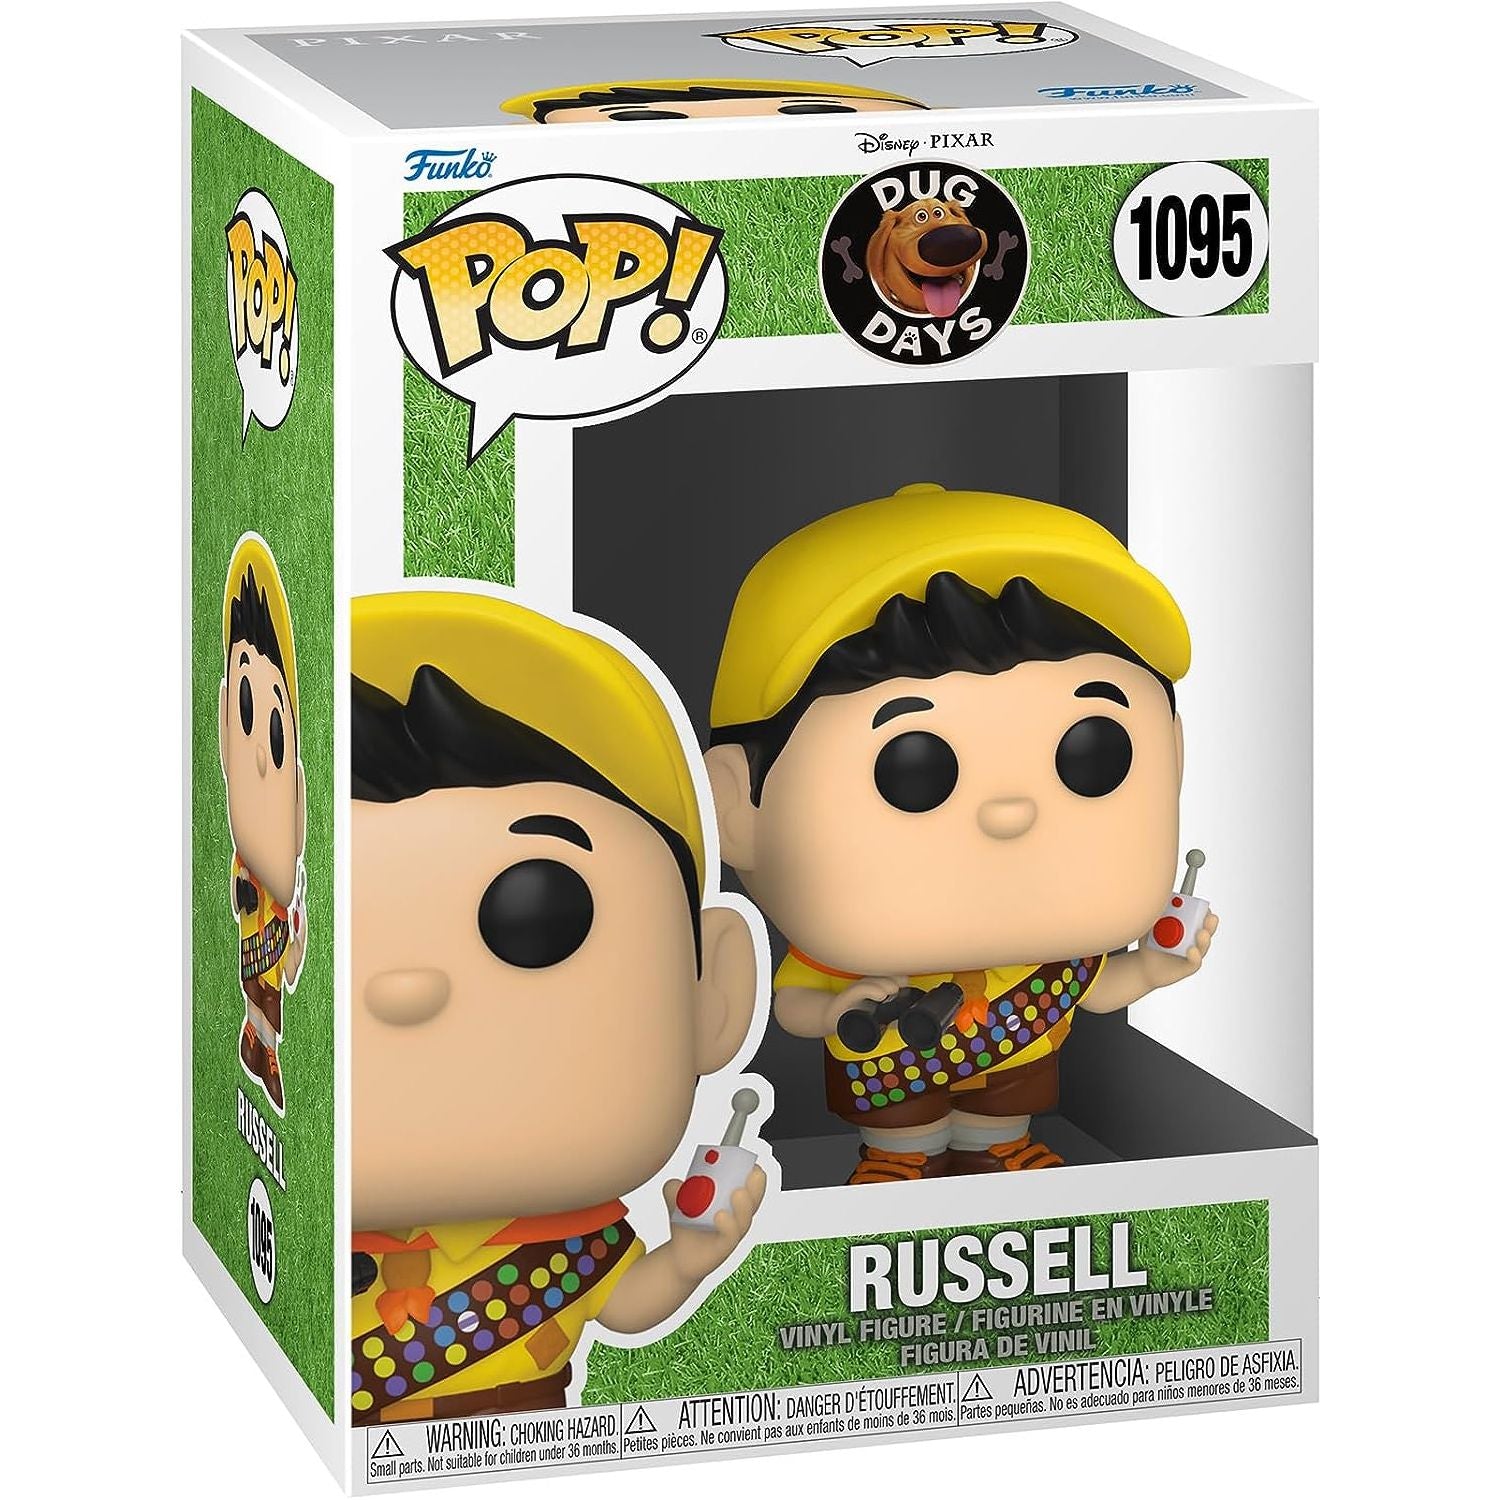 Funko Pop! Disney Dug Days - Russell